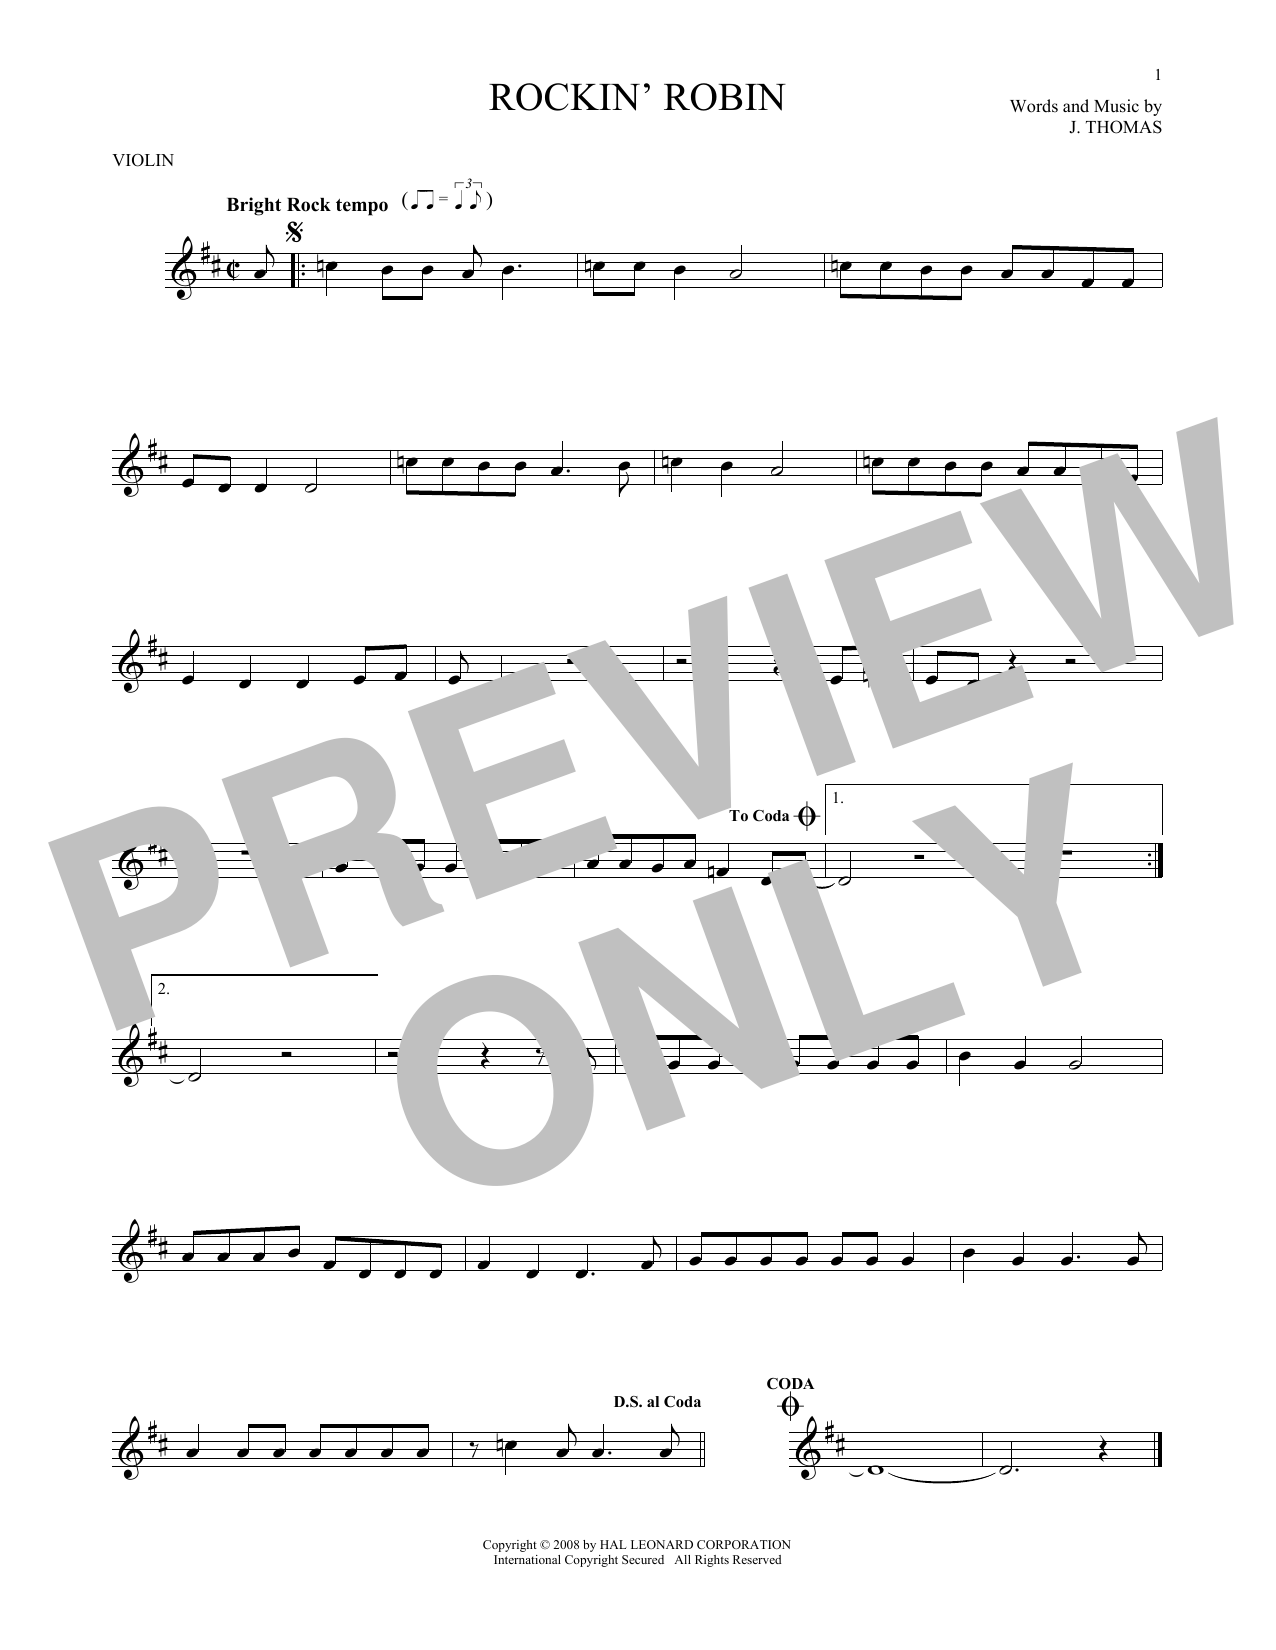 J. Thomas Rockin' Robin Sheet Music Notes & Chords for Violin - Download or Print PDF